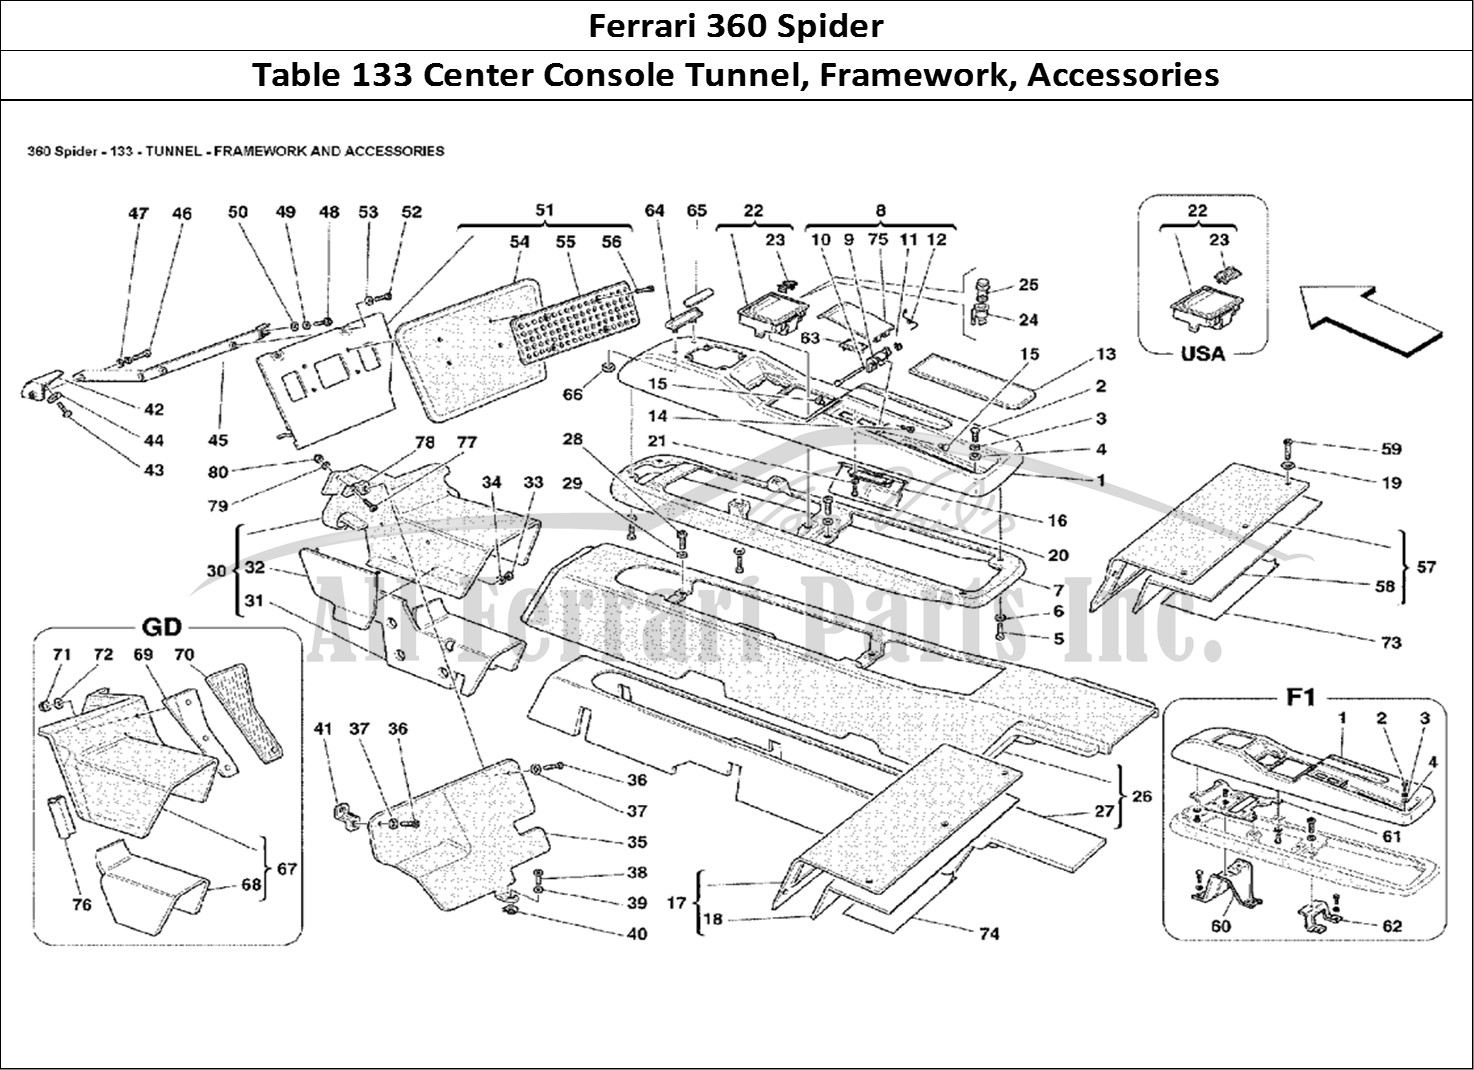 Ferrari Parts Ferrari 360 Spider Page 133 Tunnel - Framework and Ac